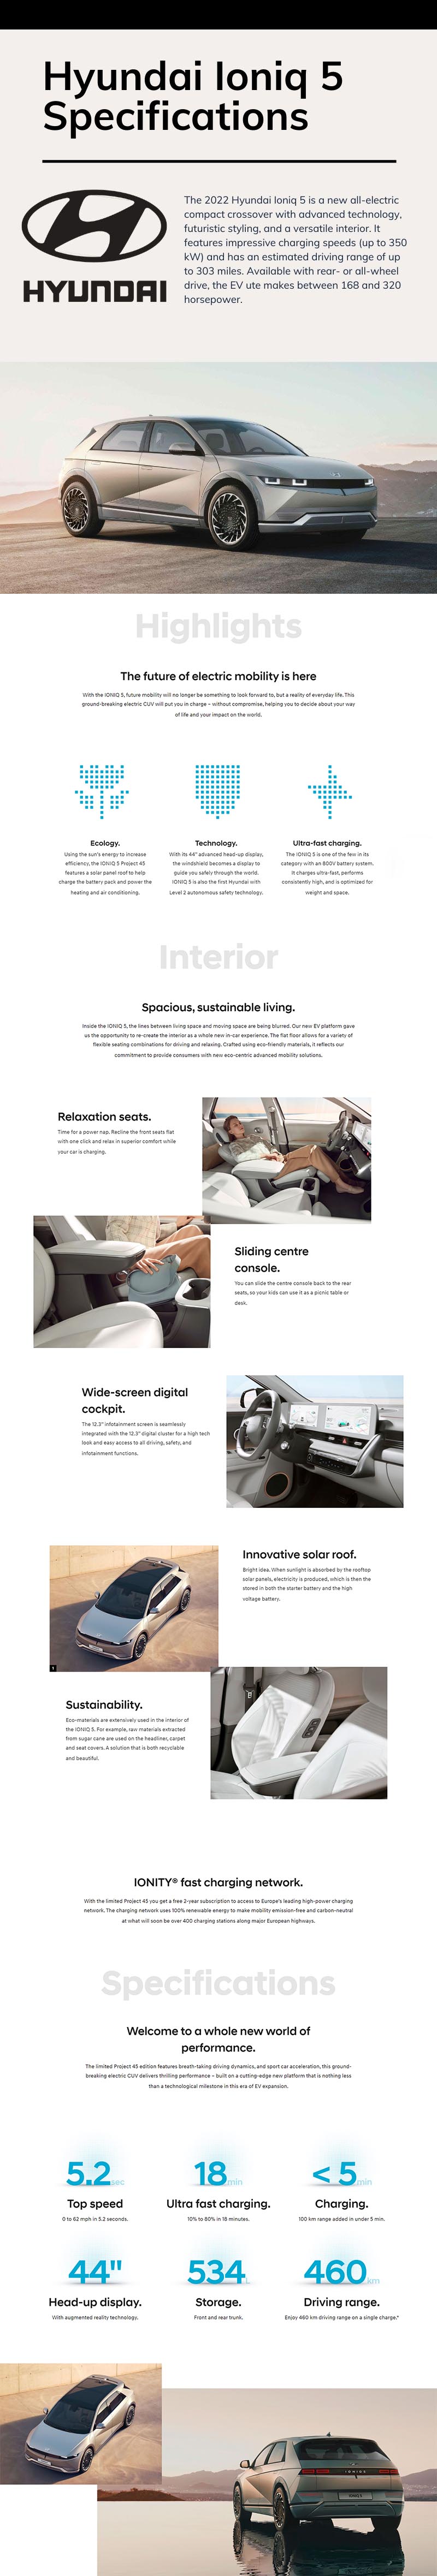 Hyundai Ioniq Specifications Infographic